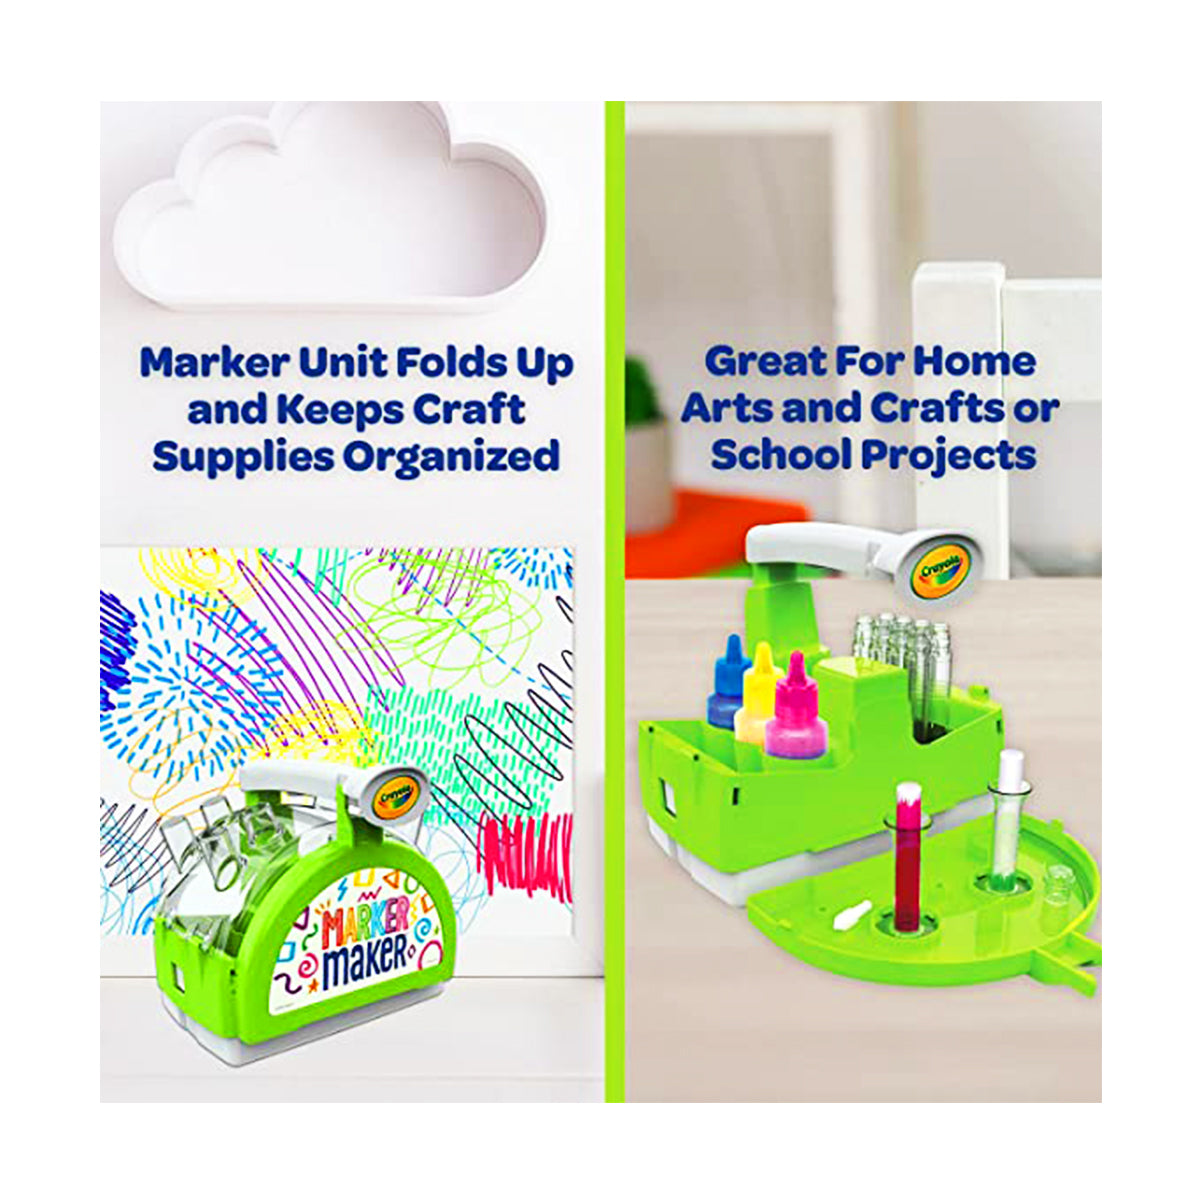 Shop Crayola Marker Maker Refill, Pastel Colo at Artsy Sister